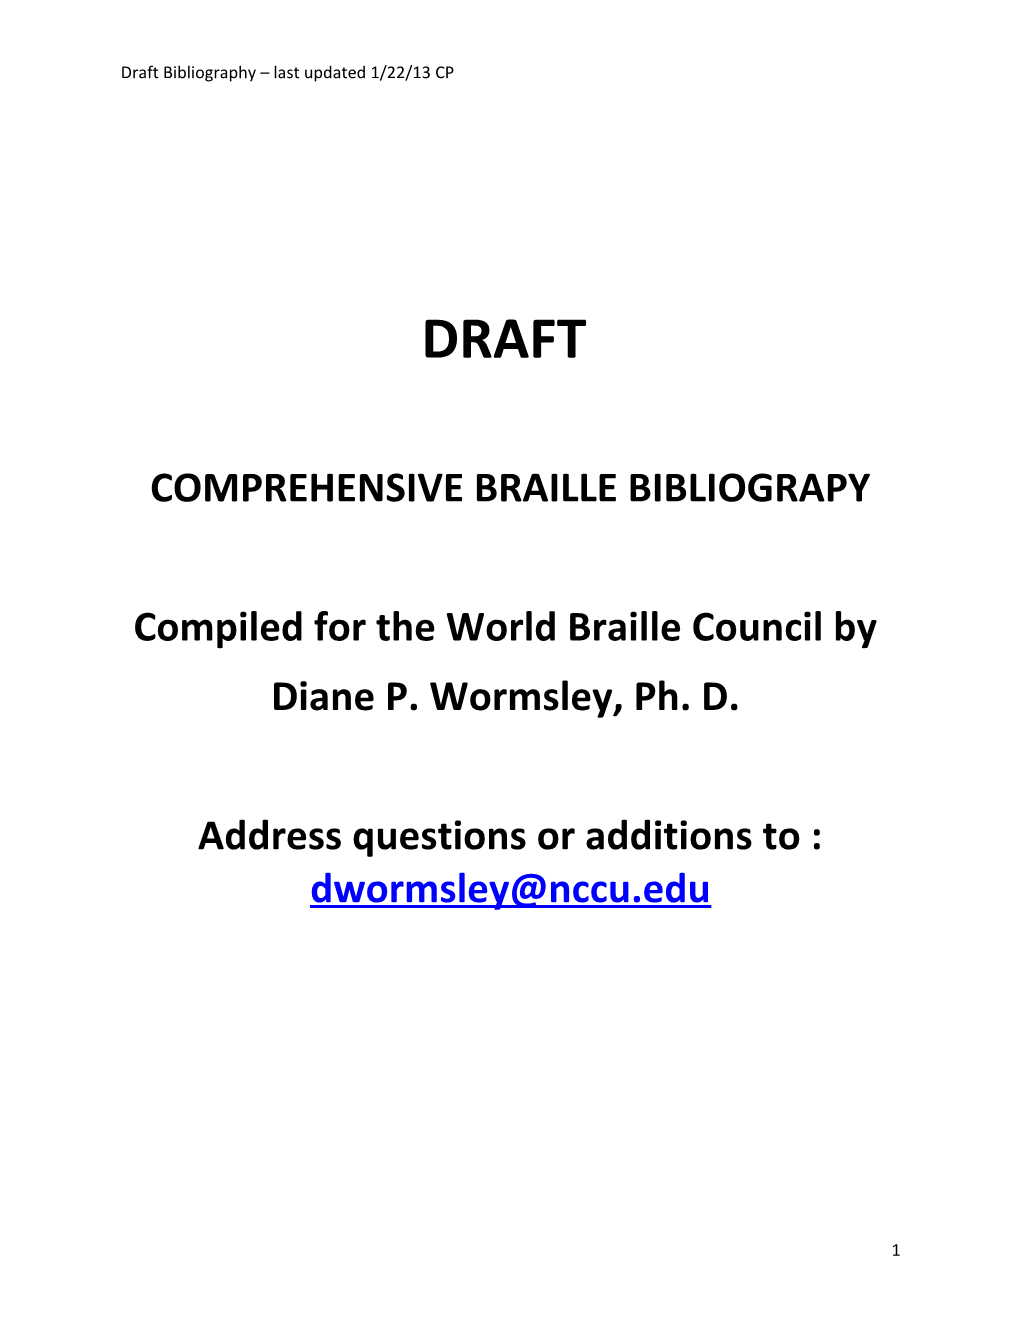 WBC Comprehensive Braille Bibliography